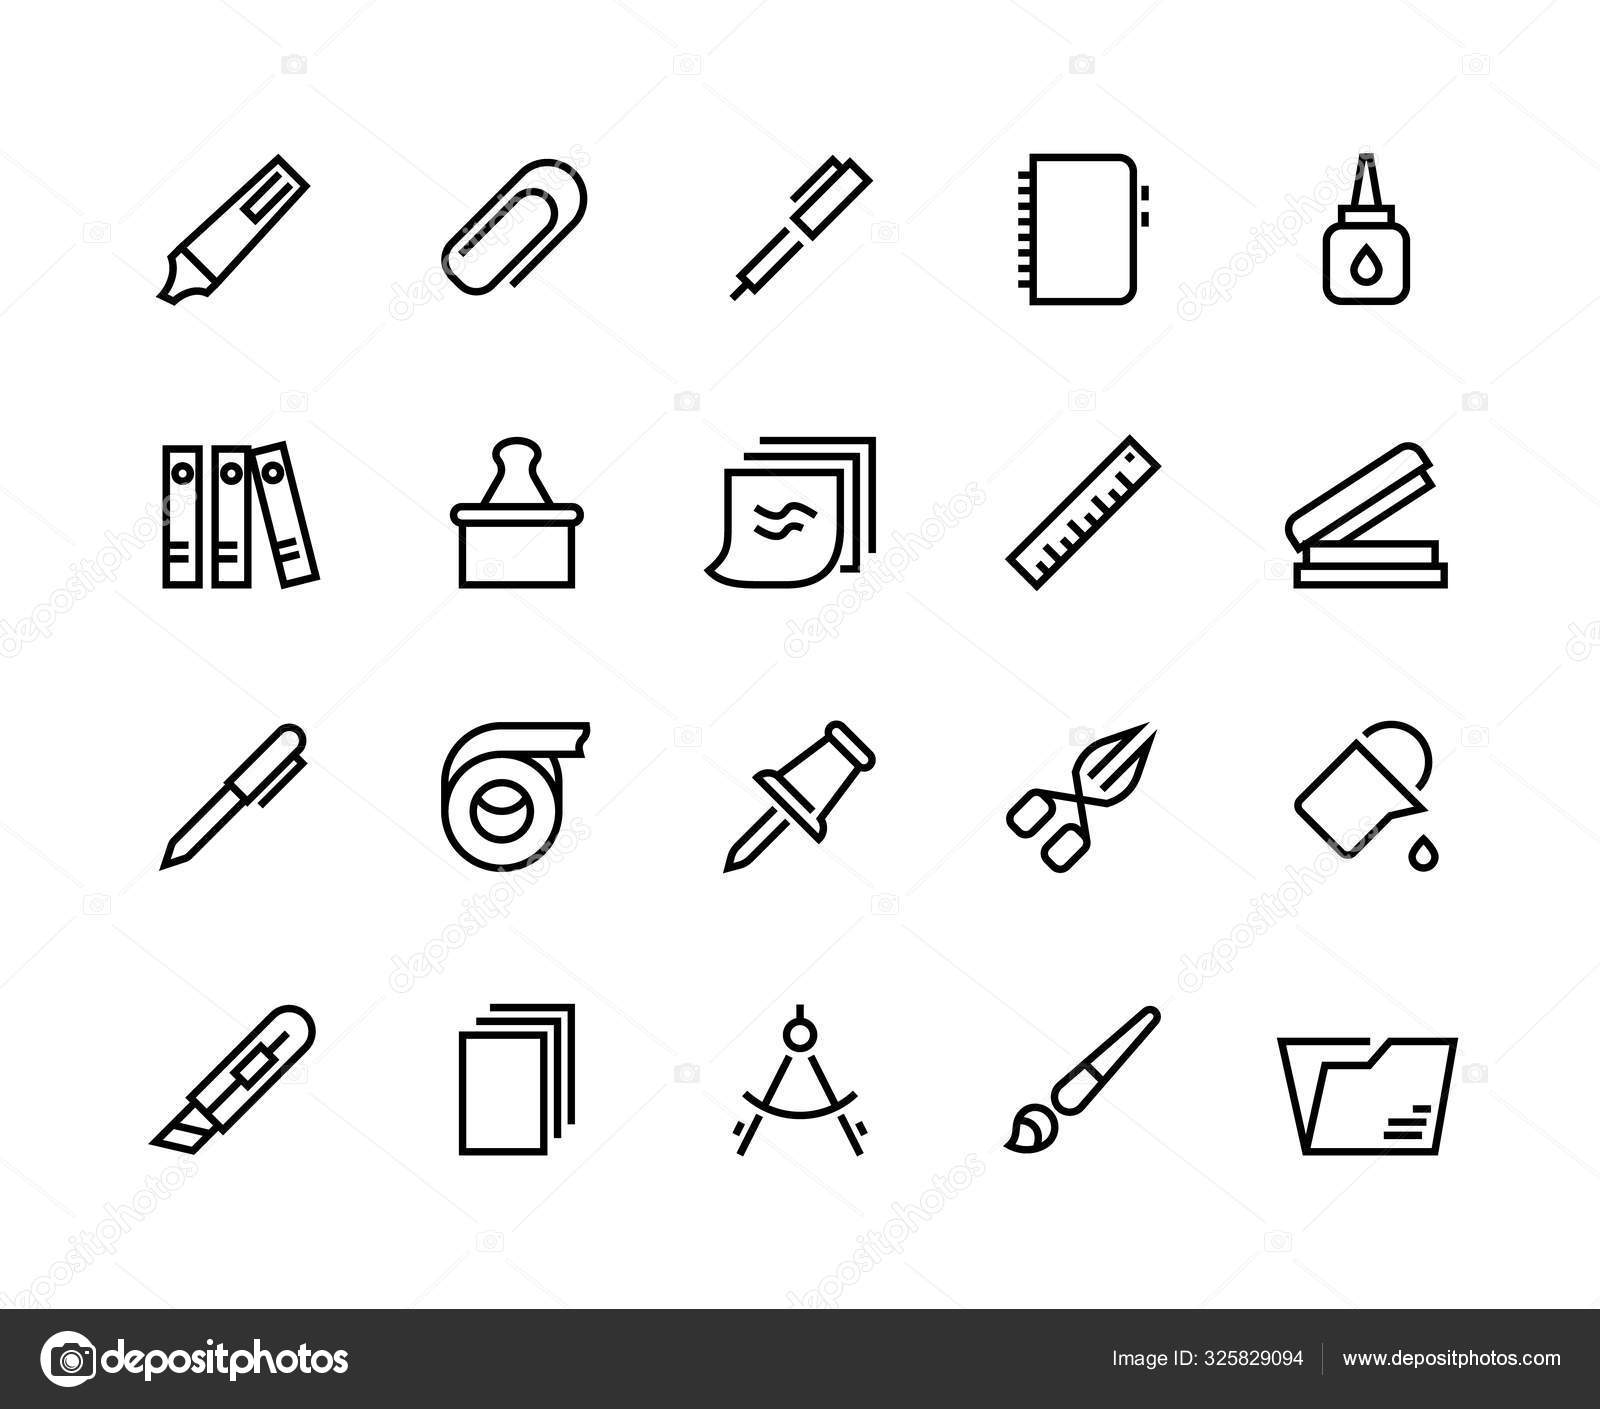 Vector Set Of School Stationery Stickers Stock Illustration